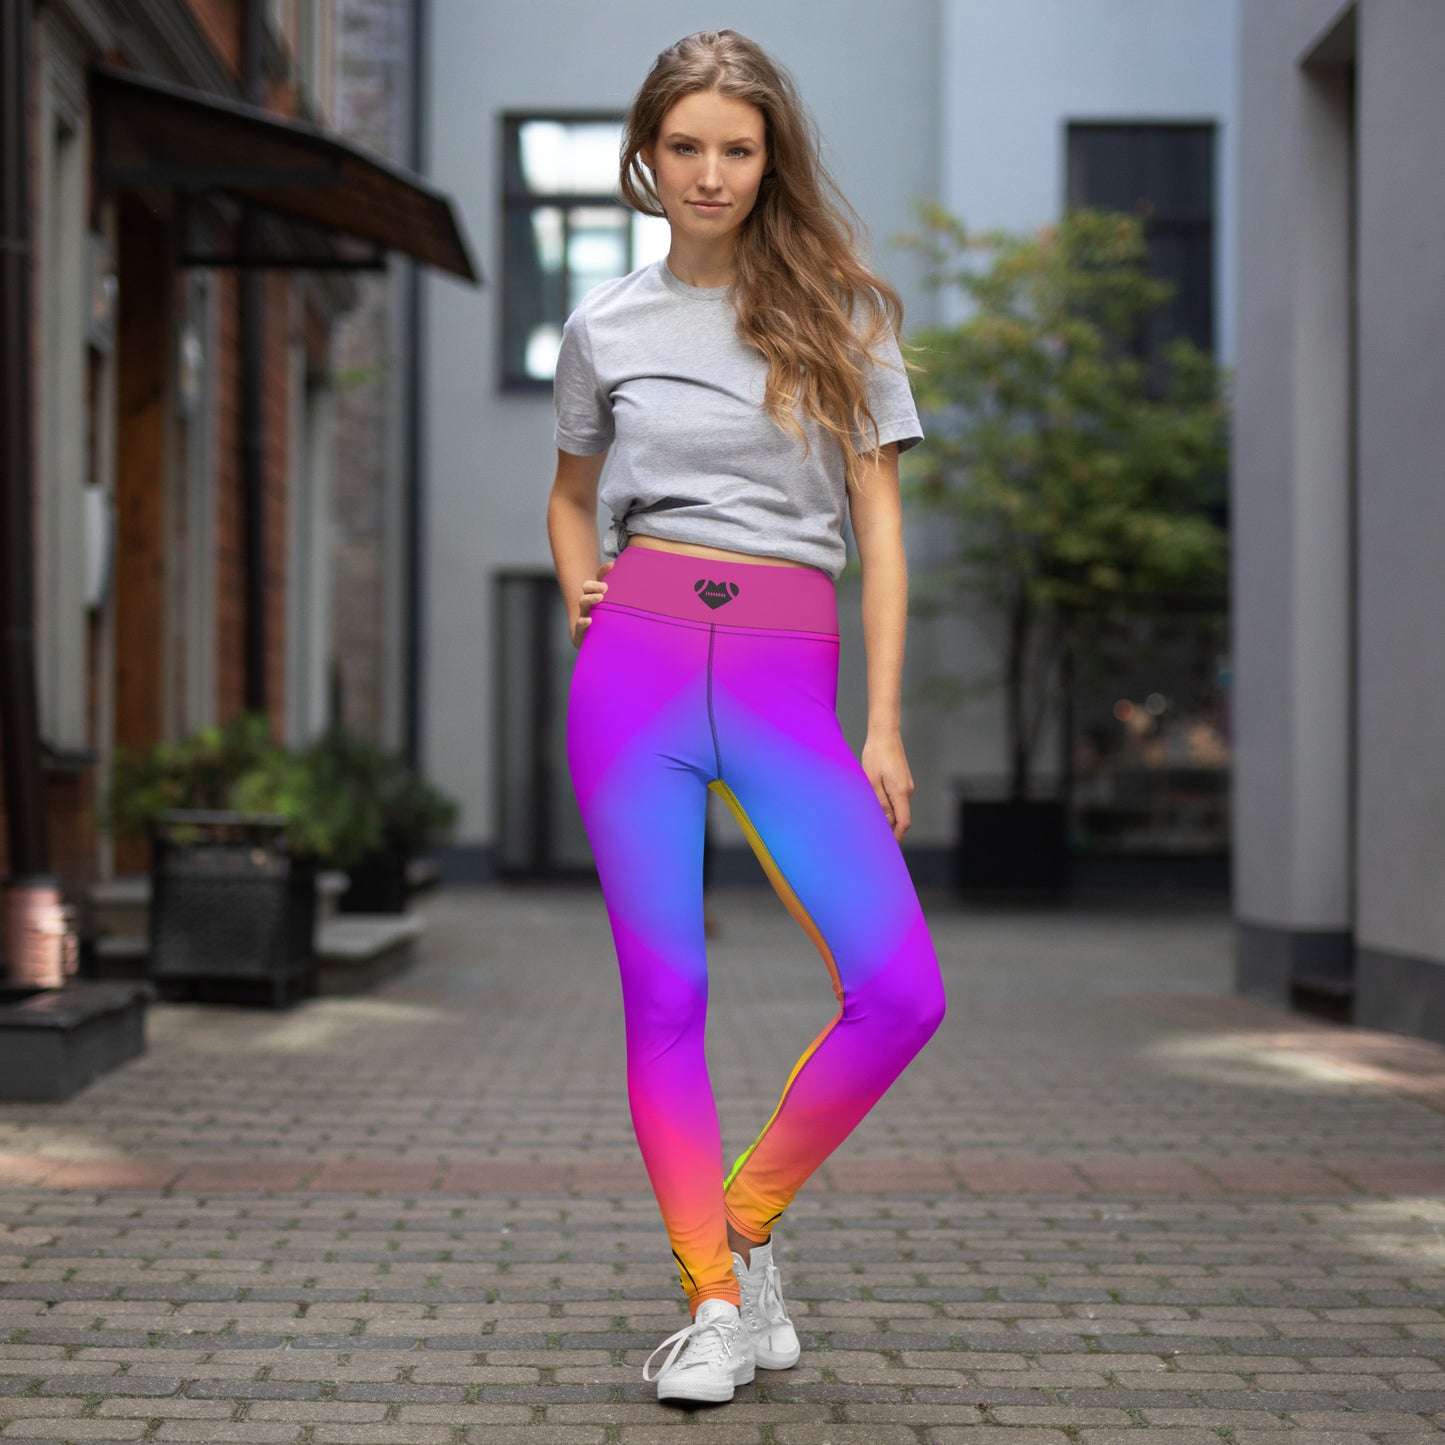 AFA Abstract Pattern Bold Bright Colors Yoga Leggings